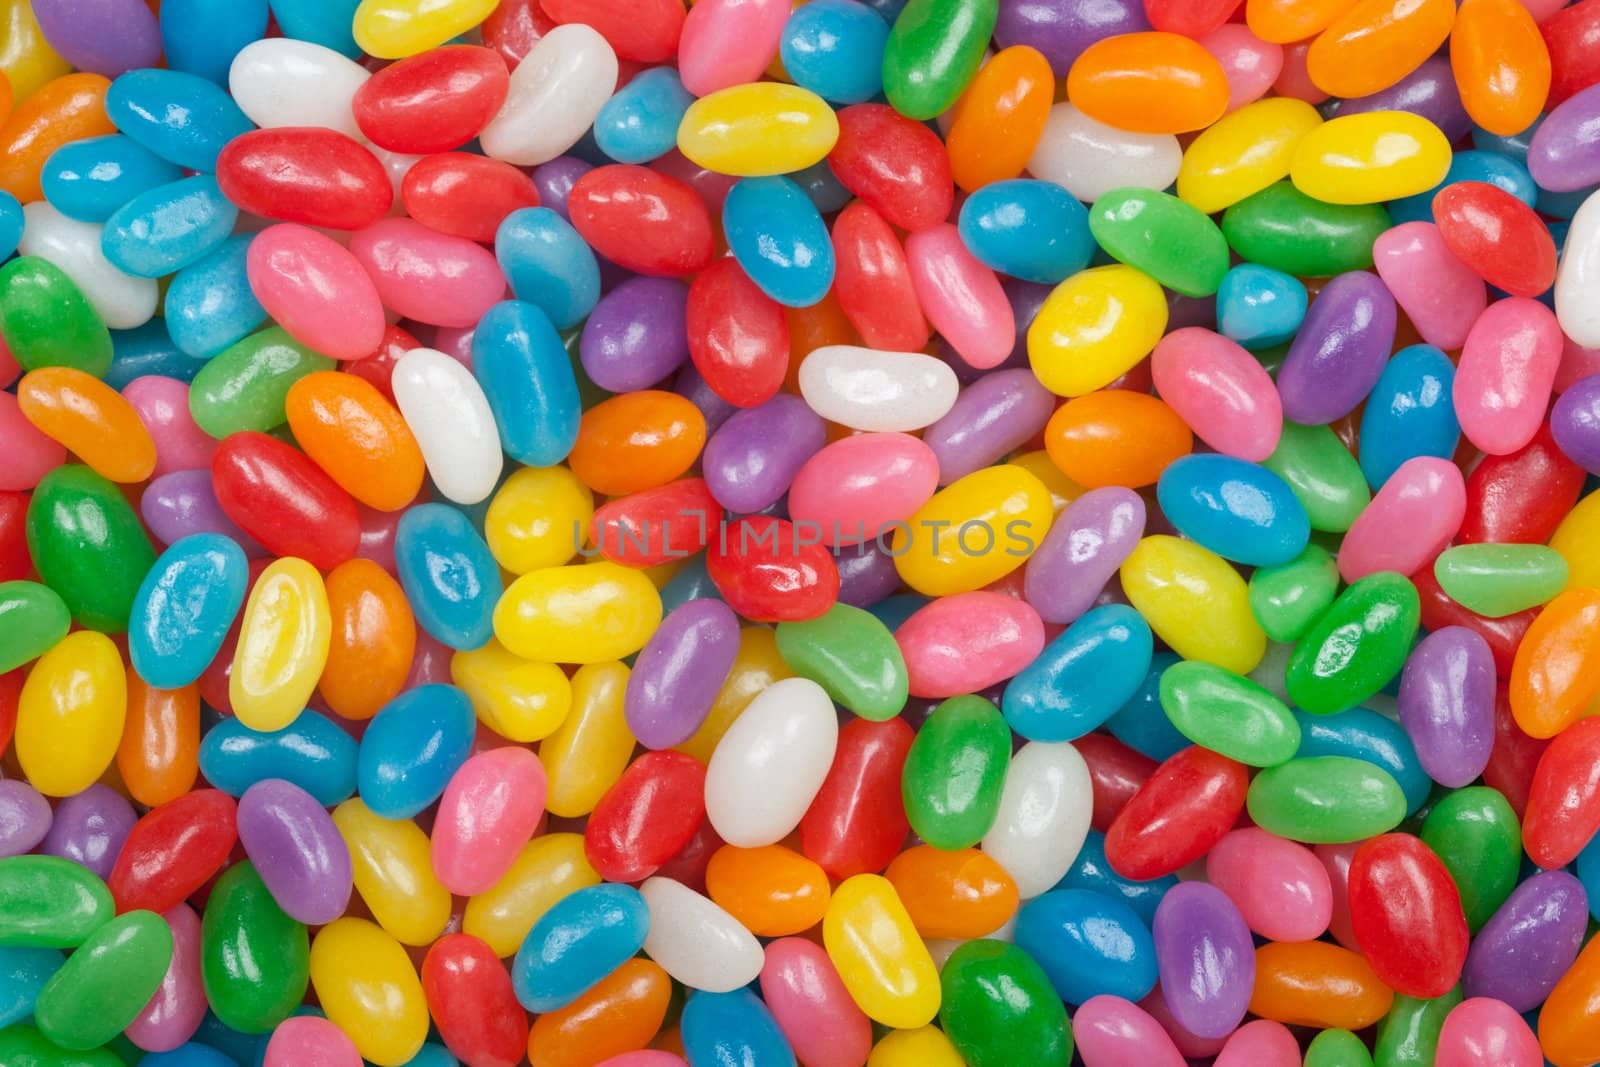 Jelly Beans by Daniel_Wiedemann